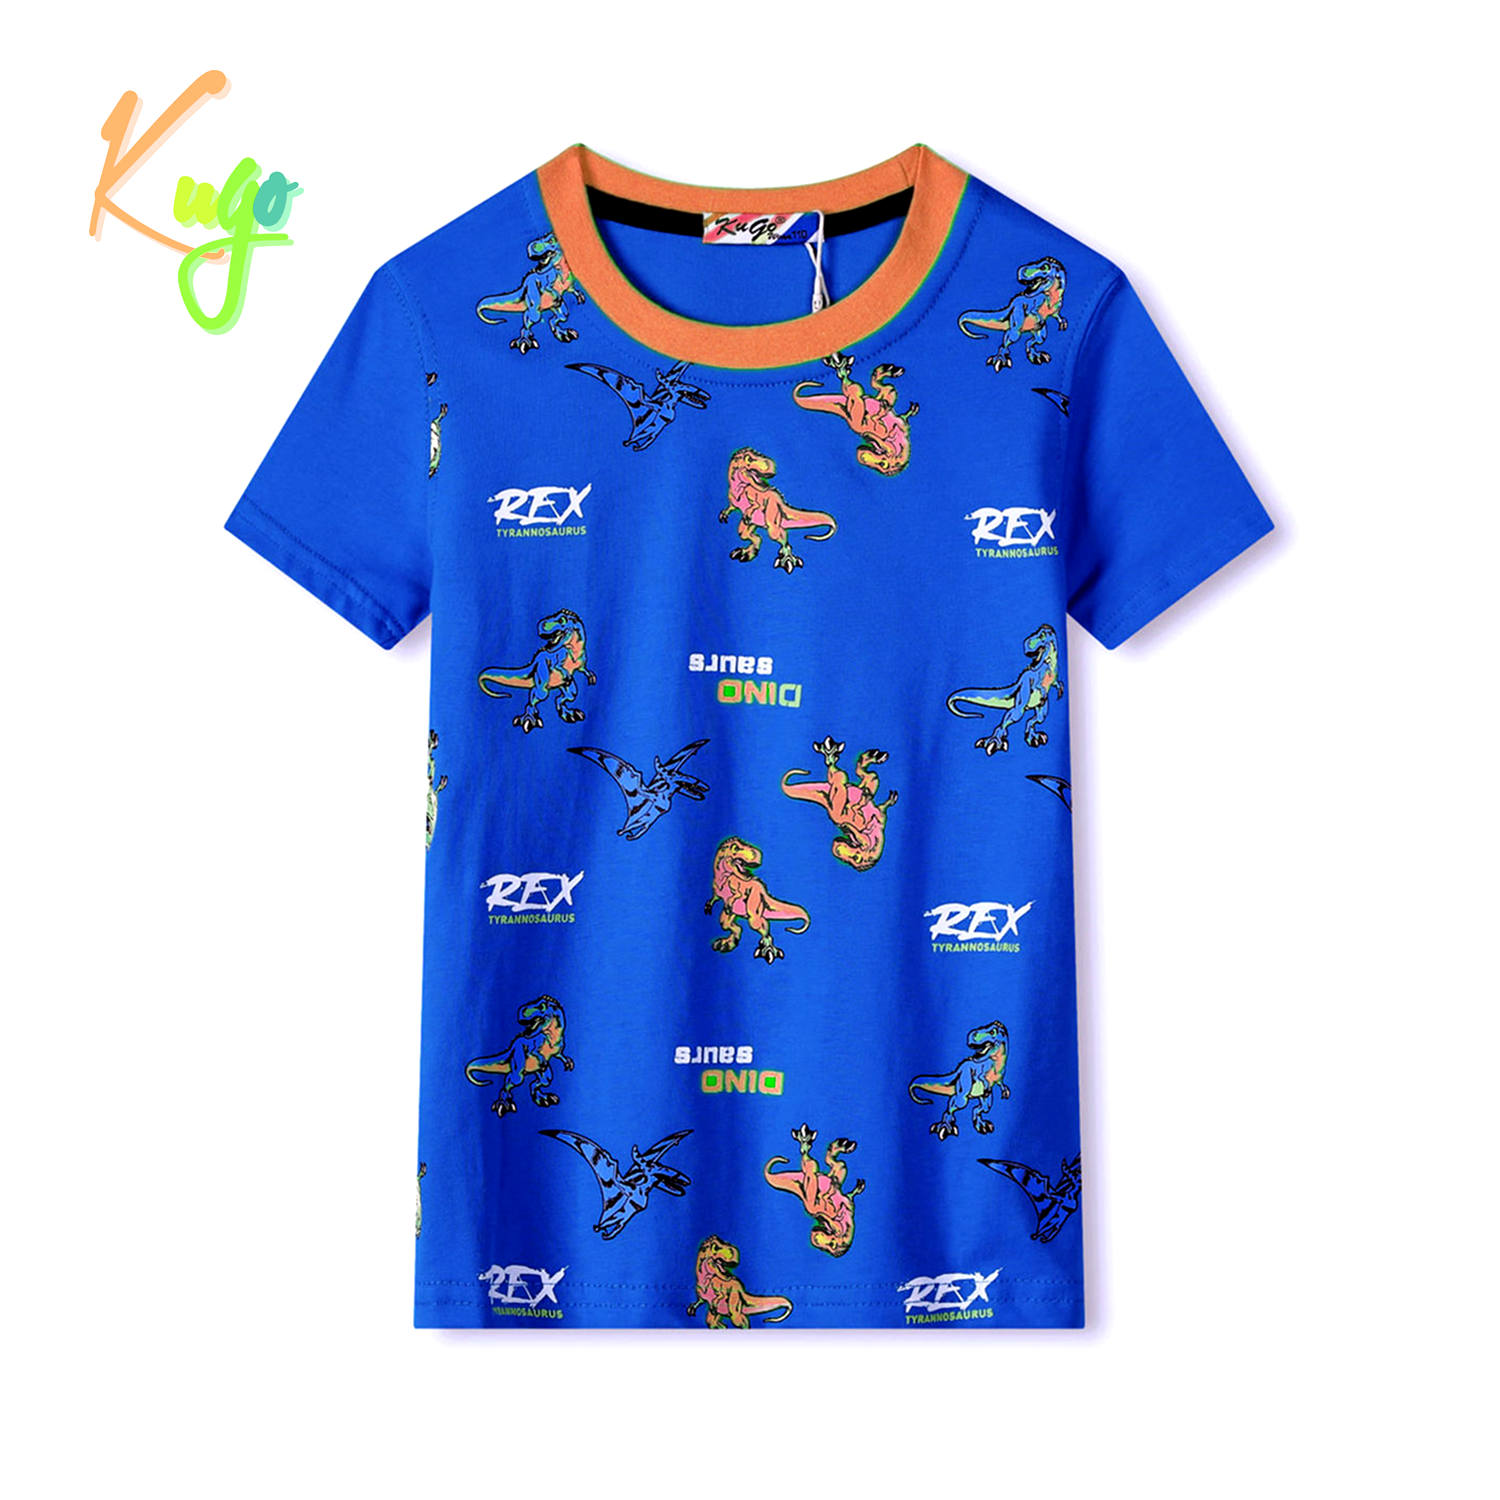 Chlapecké tričko - KUGO TM8574C, modrá Barva: Modrá, Velikost: 116